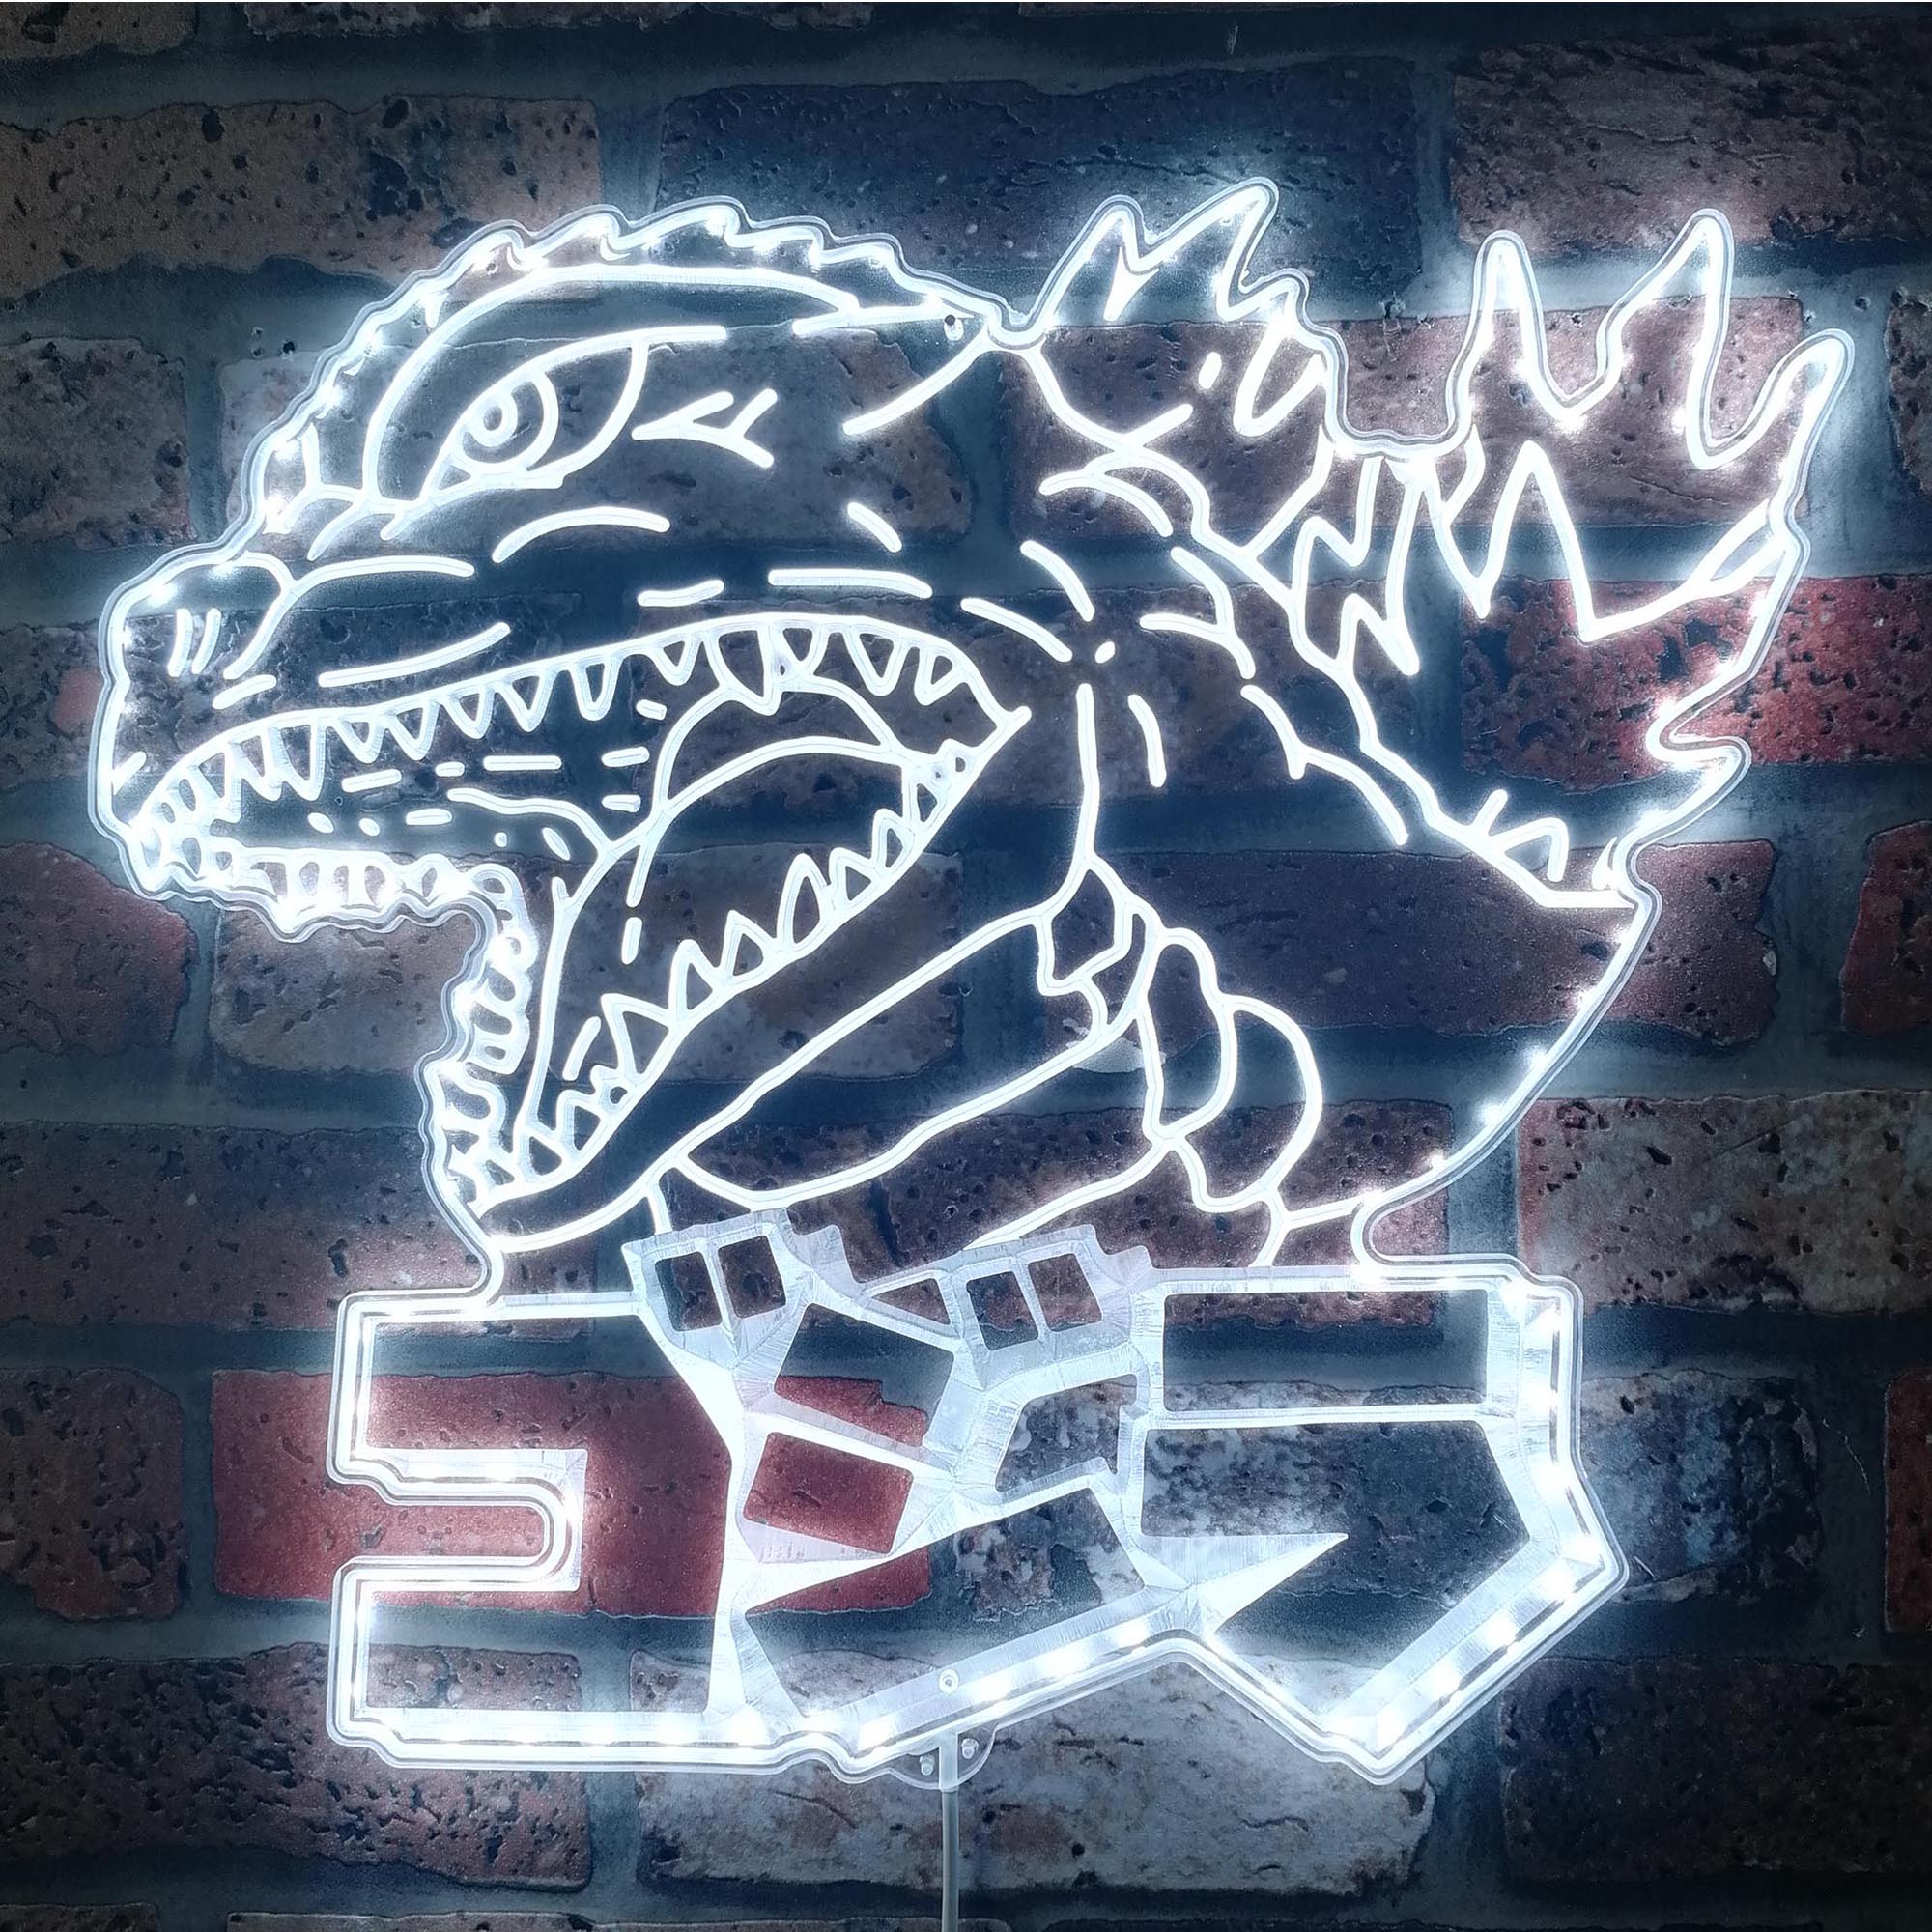 Godzilla Dynamic RGB Edge Lit LED Sign